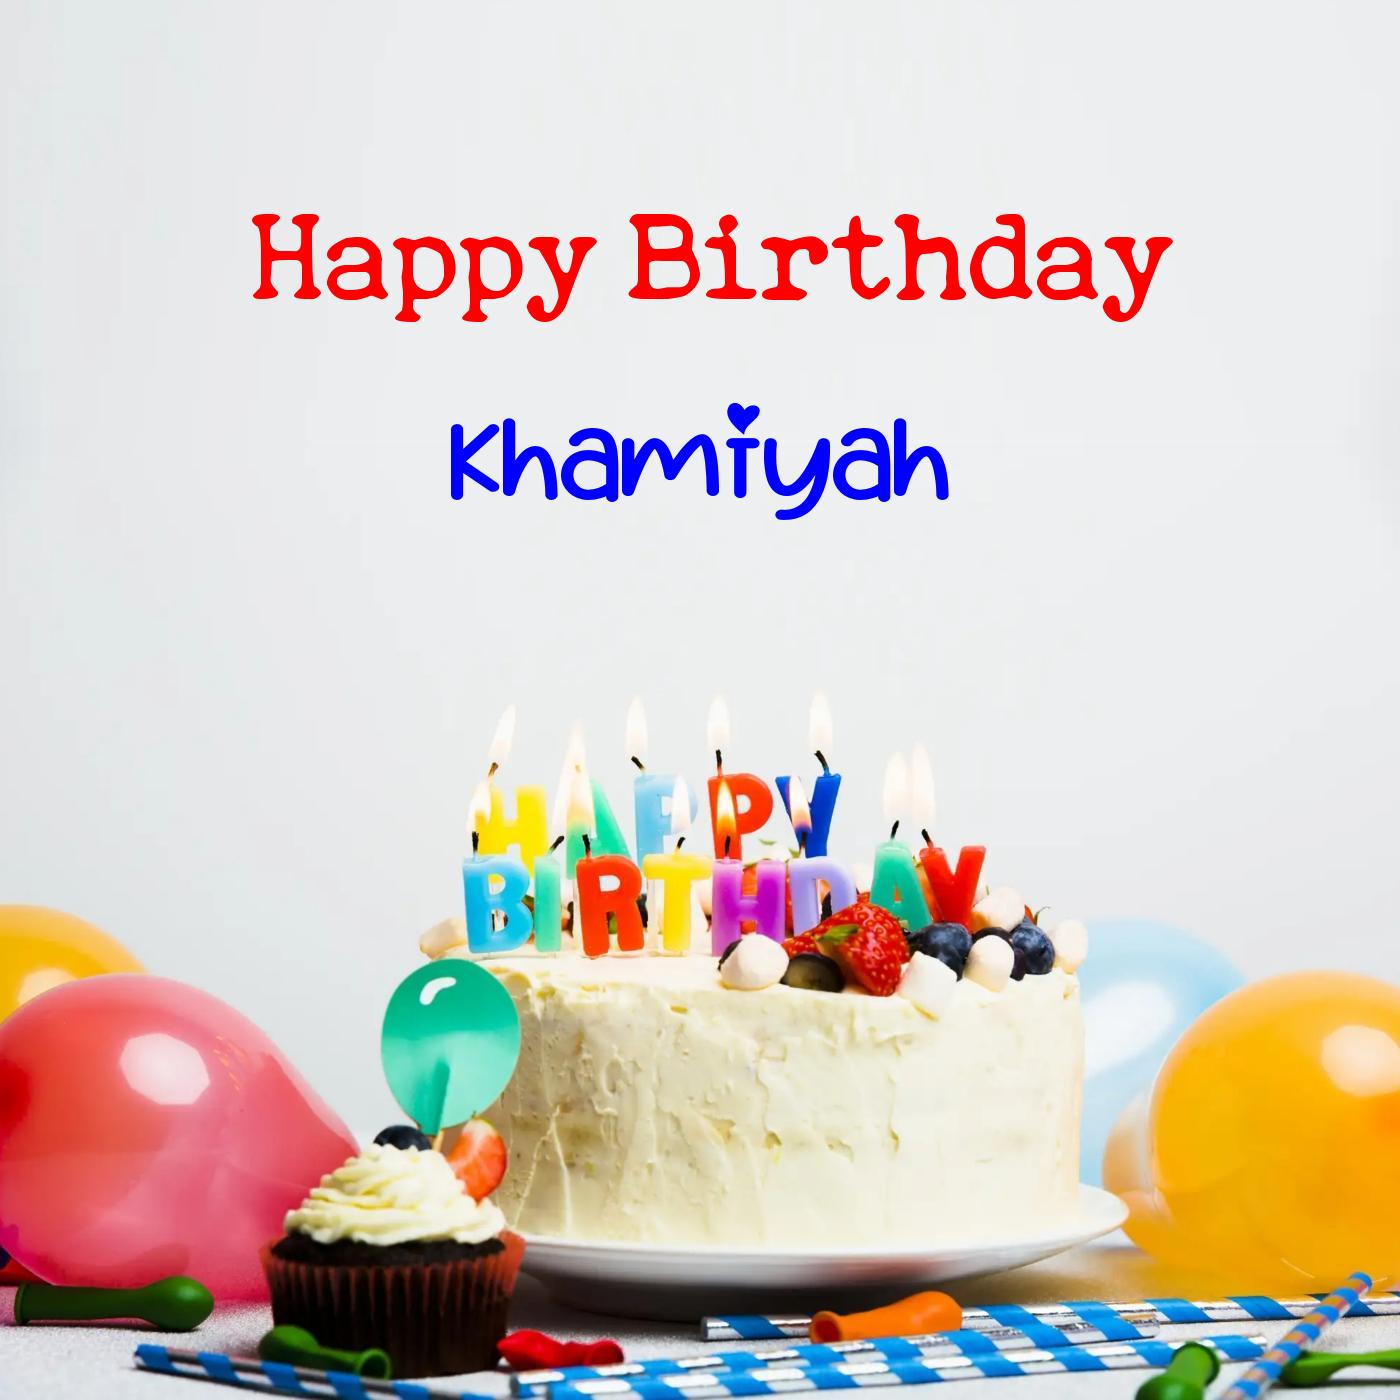 Happy Birthday Khamiyah Cake Balloons Card